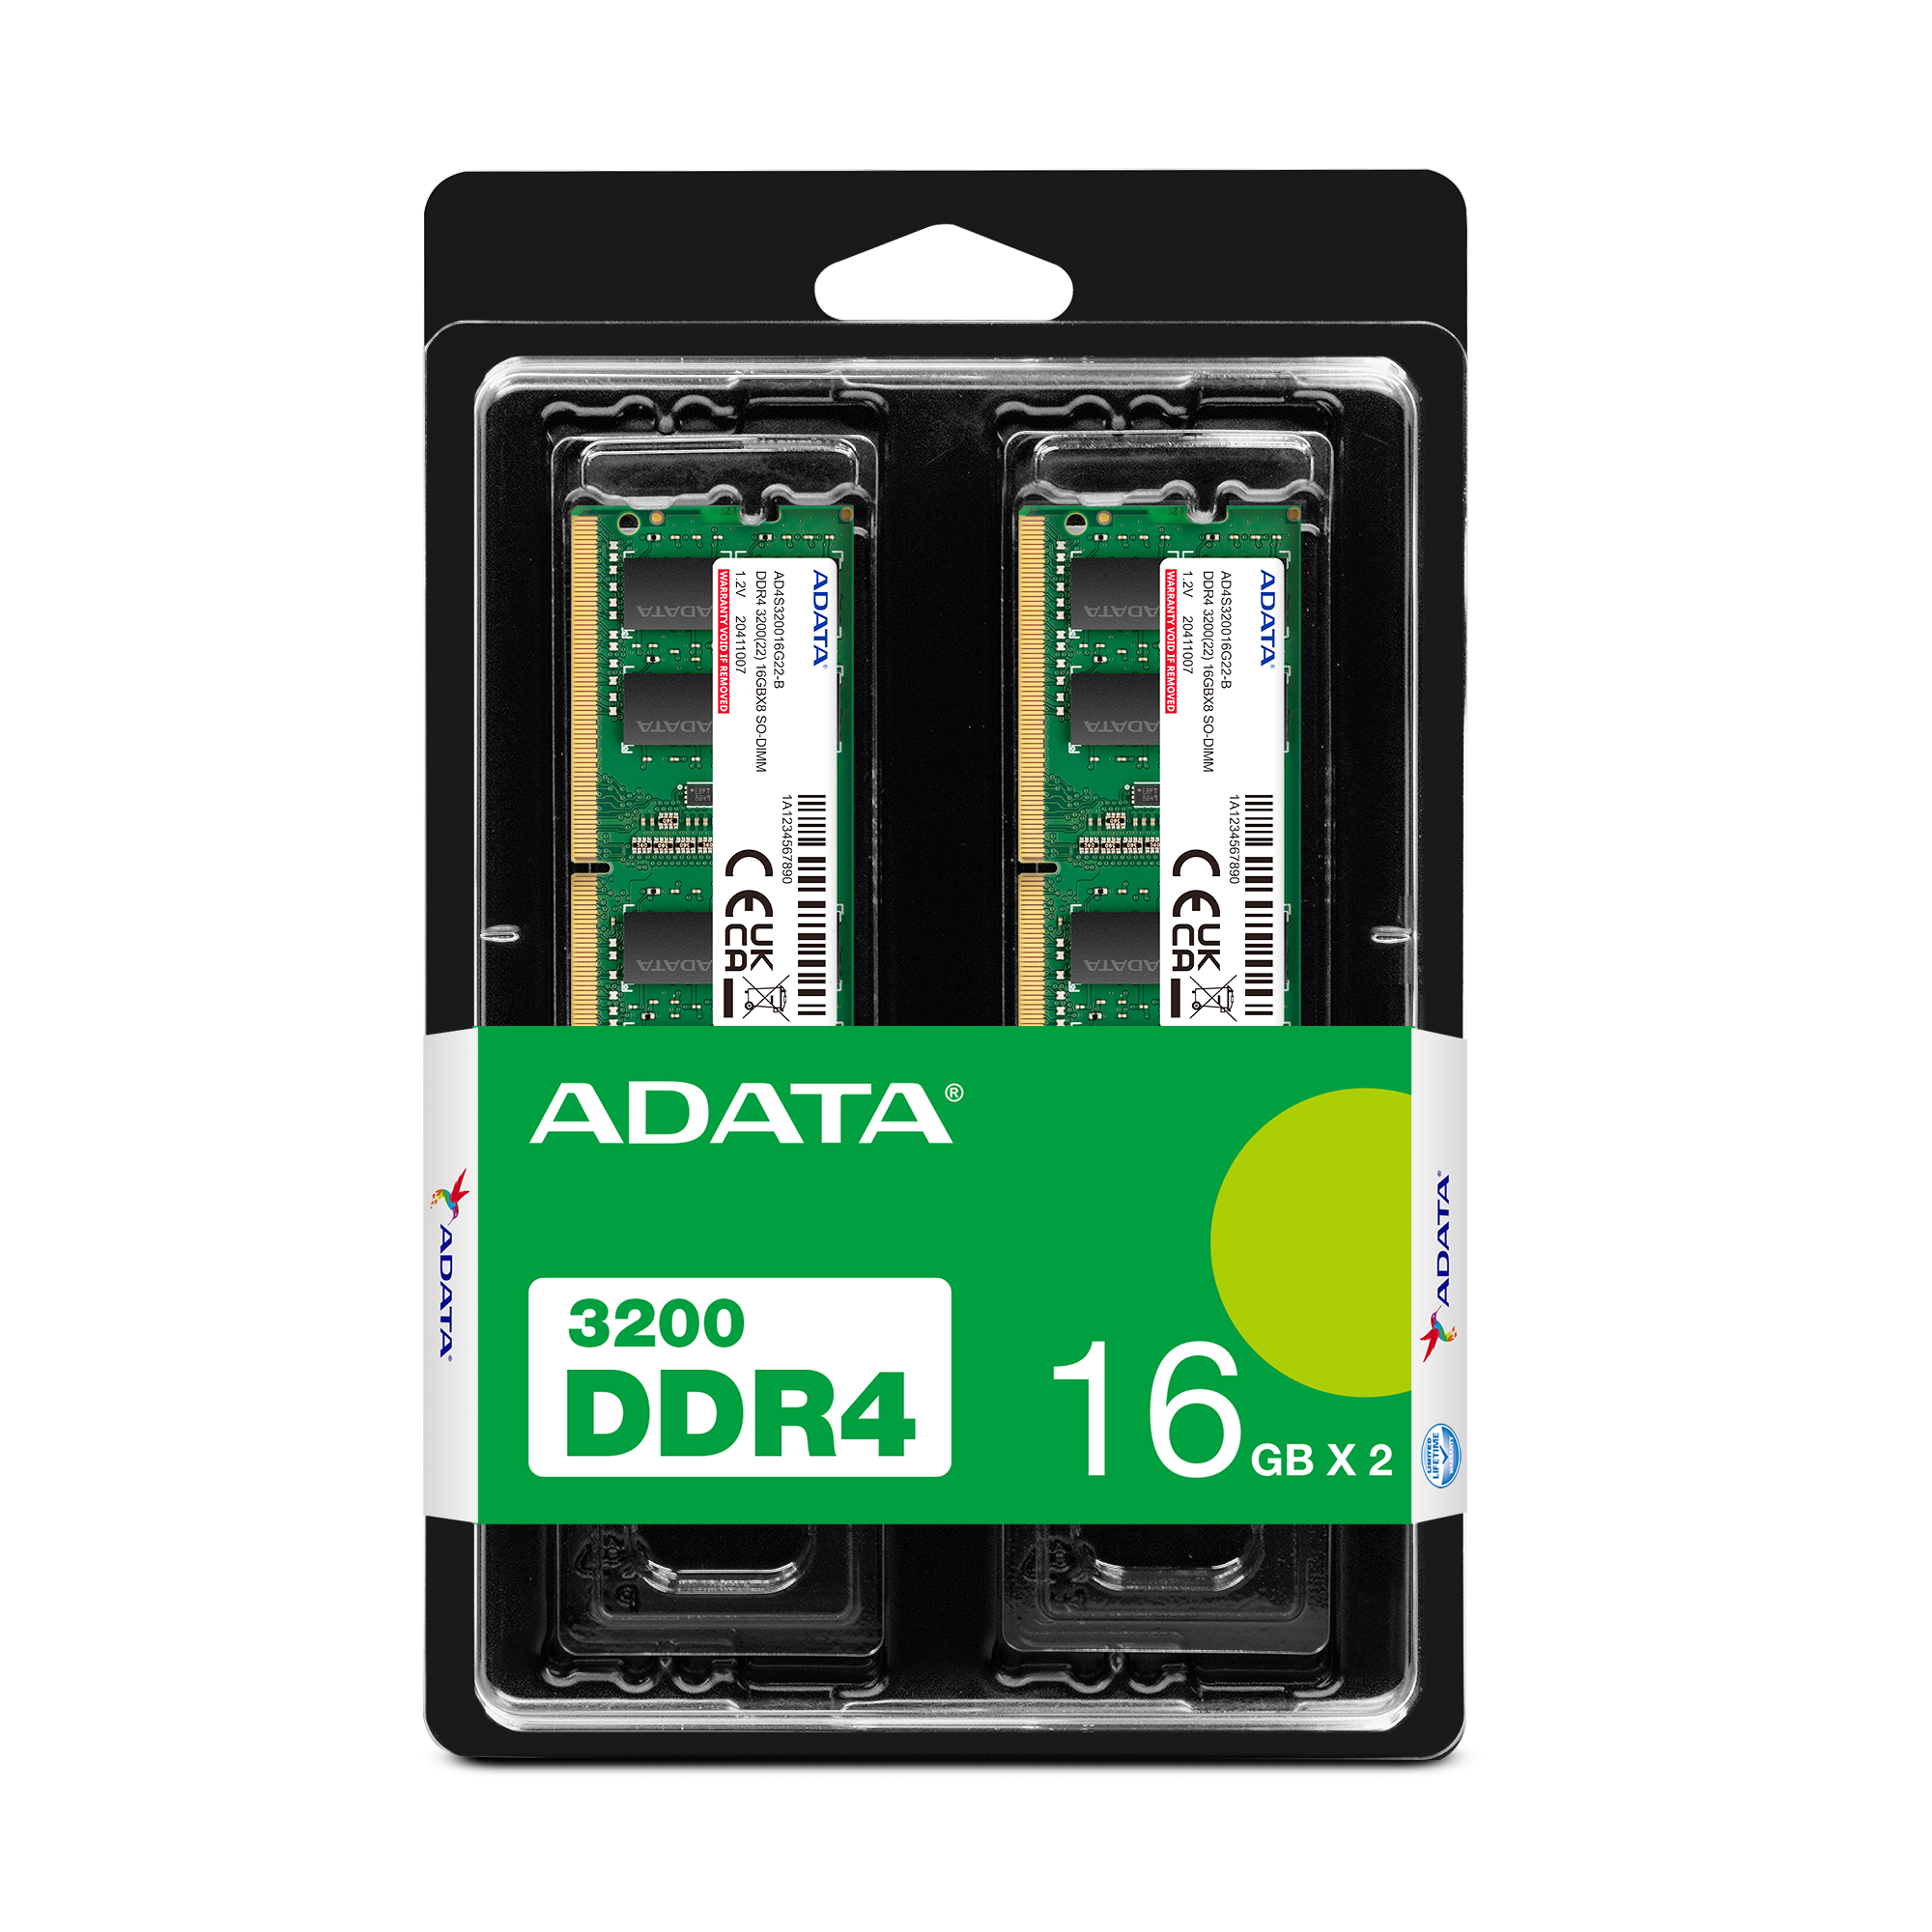 ADATA Desktop RAM 16GB DDR4 3200MHz: Optimize Your PC's Speed